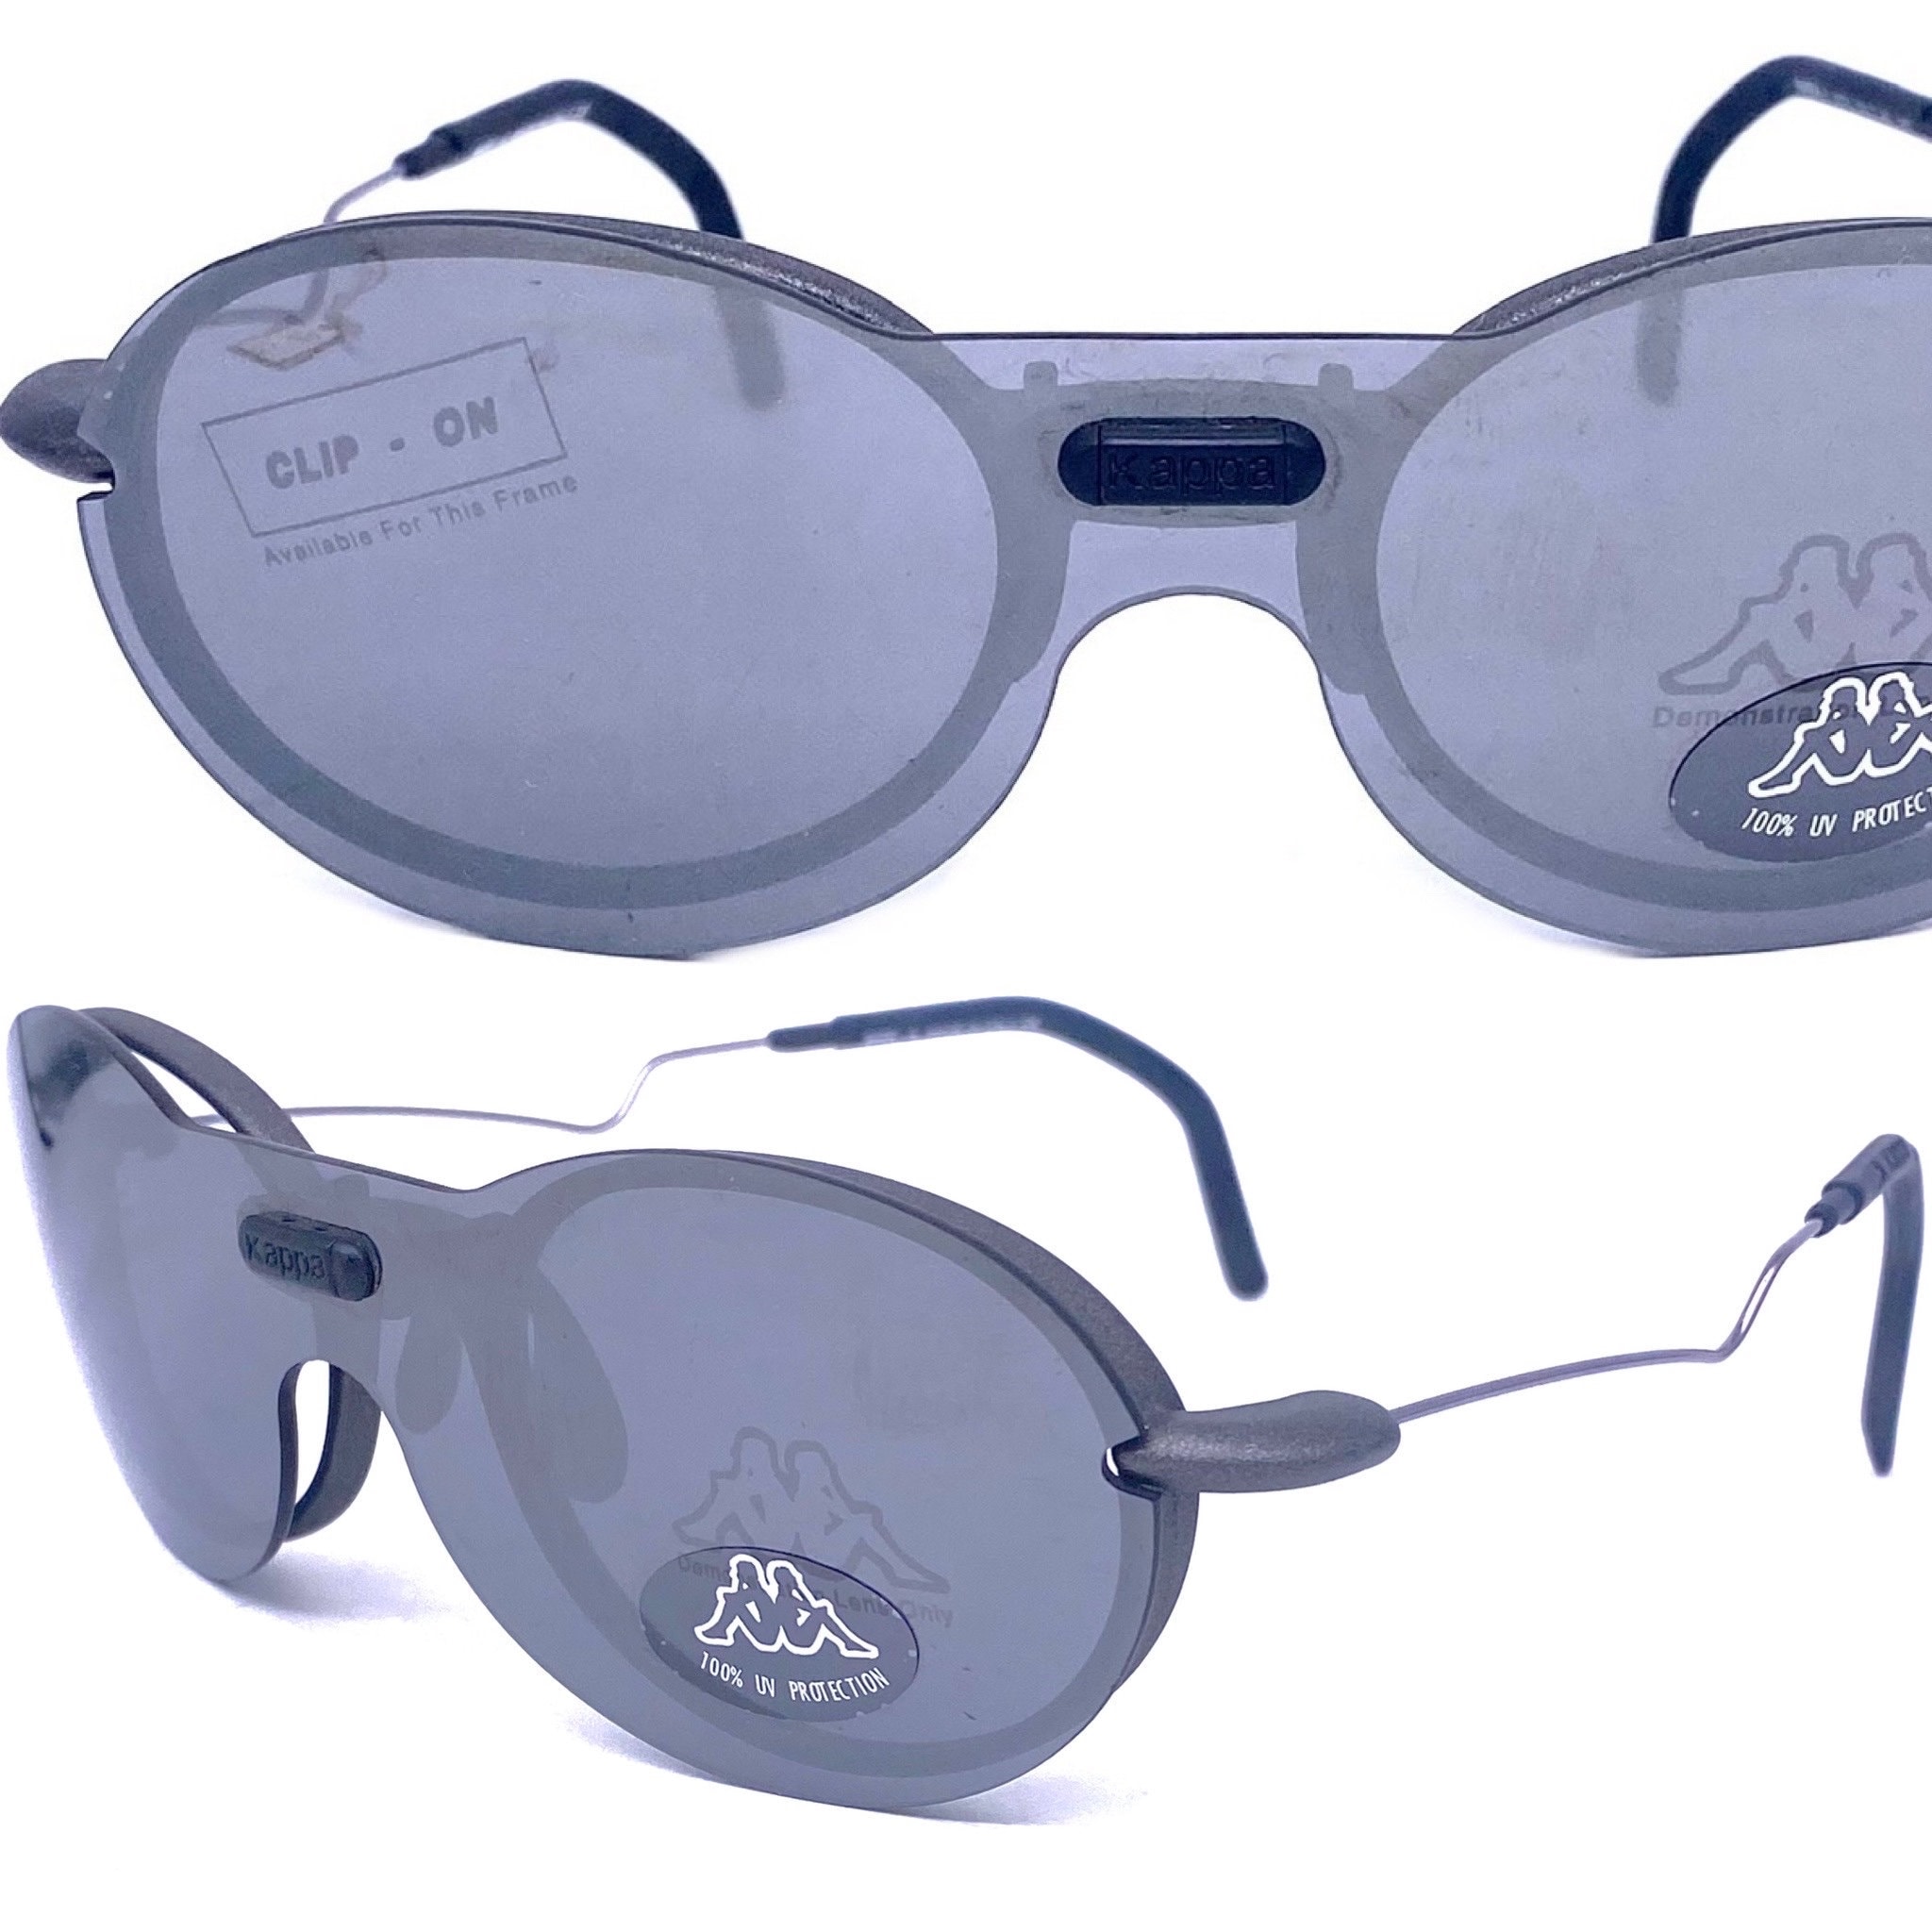 At håndtere slag forudsætning Kappa Gara1 Clip-on Sport Wrap Oval Sunglasses Eyeglasses - Etsy